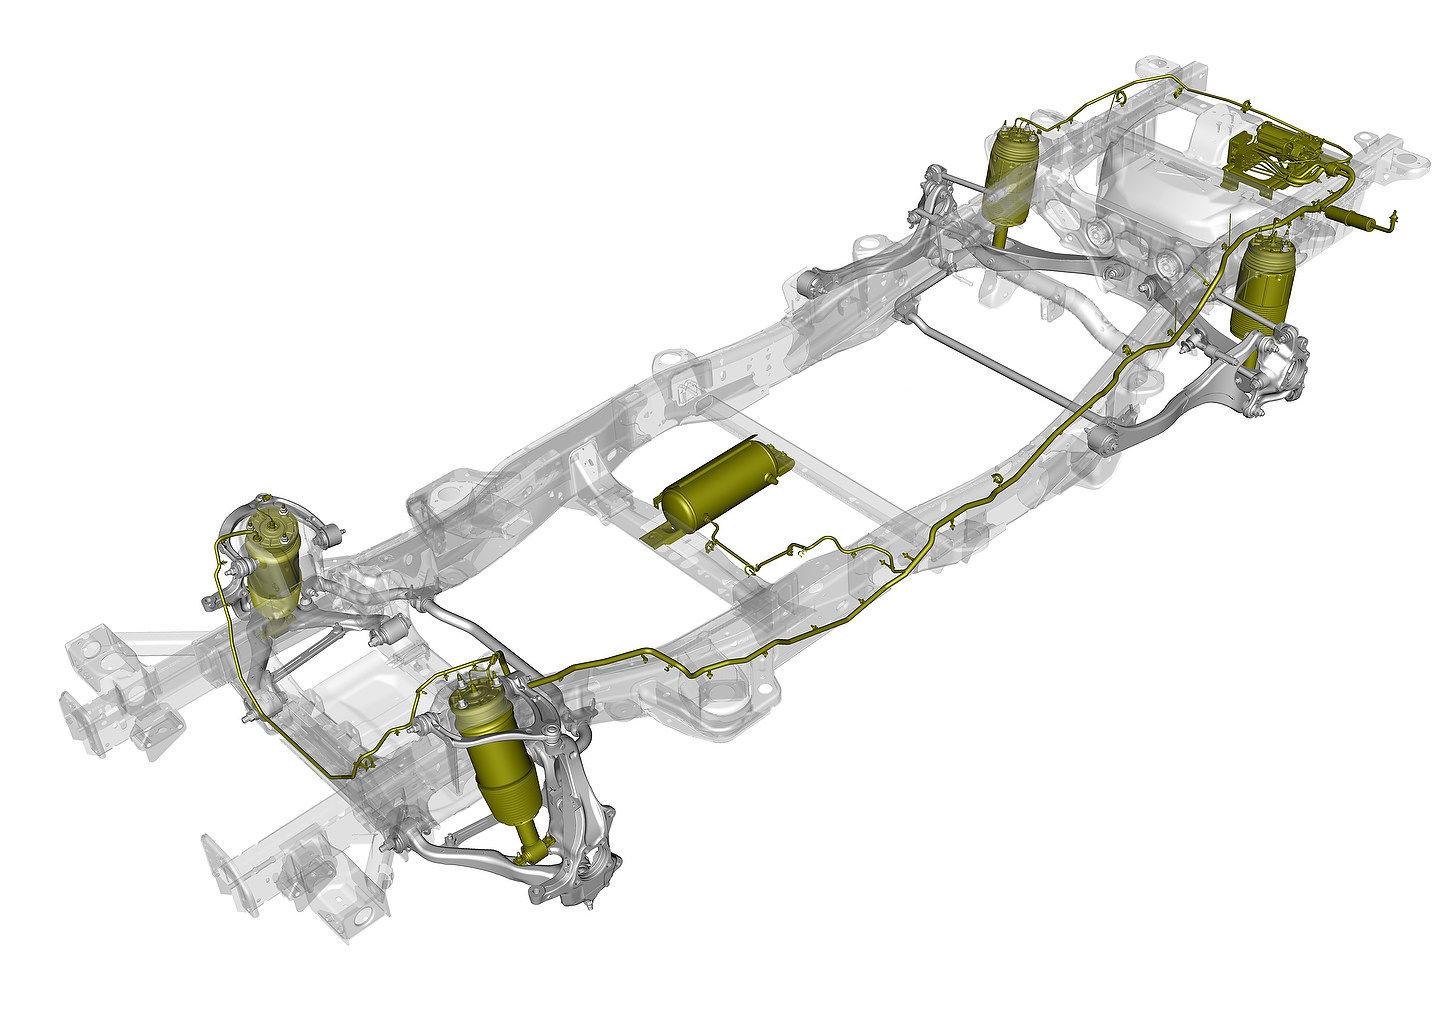 Qu'est-ce que la technologie de suspension adaptative Air Ride de General Motors?